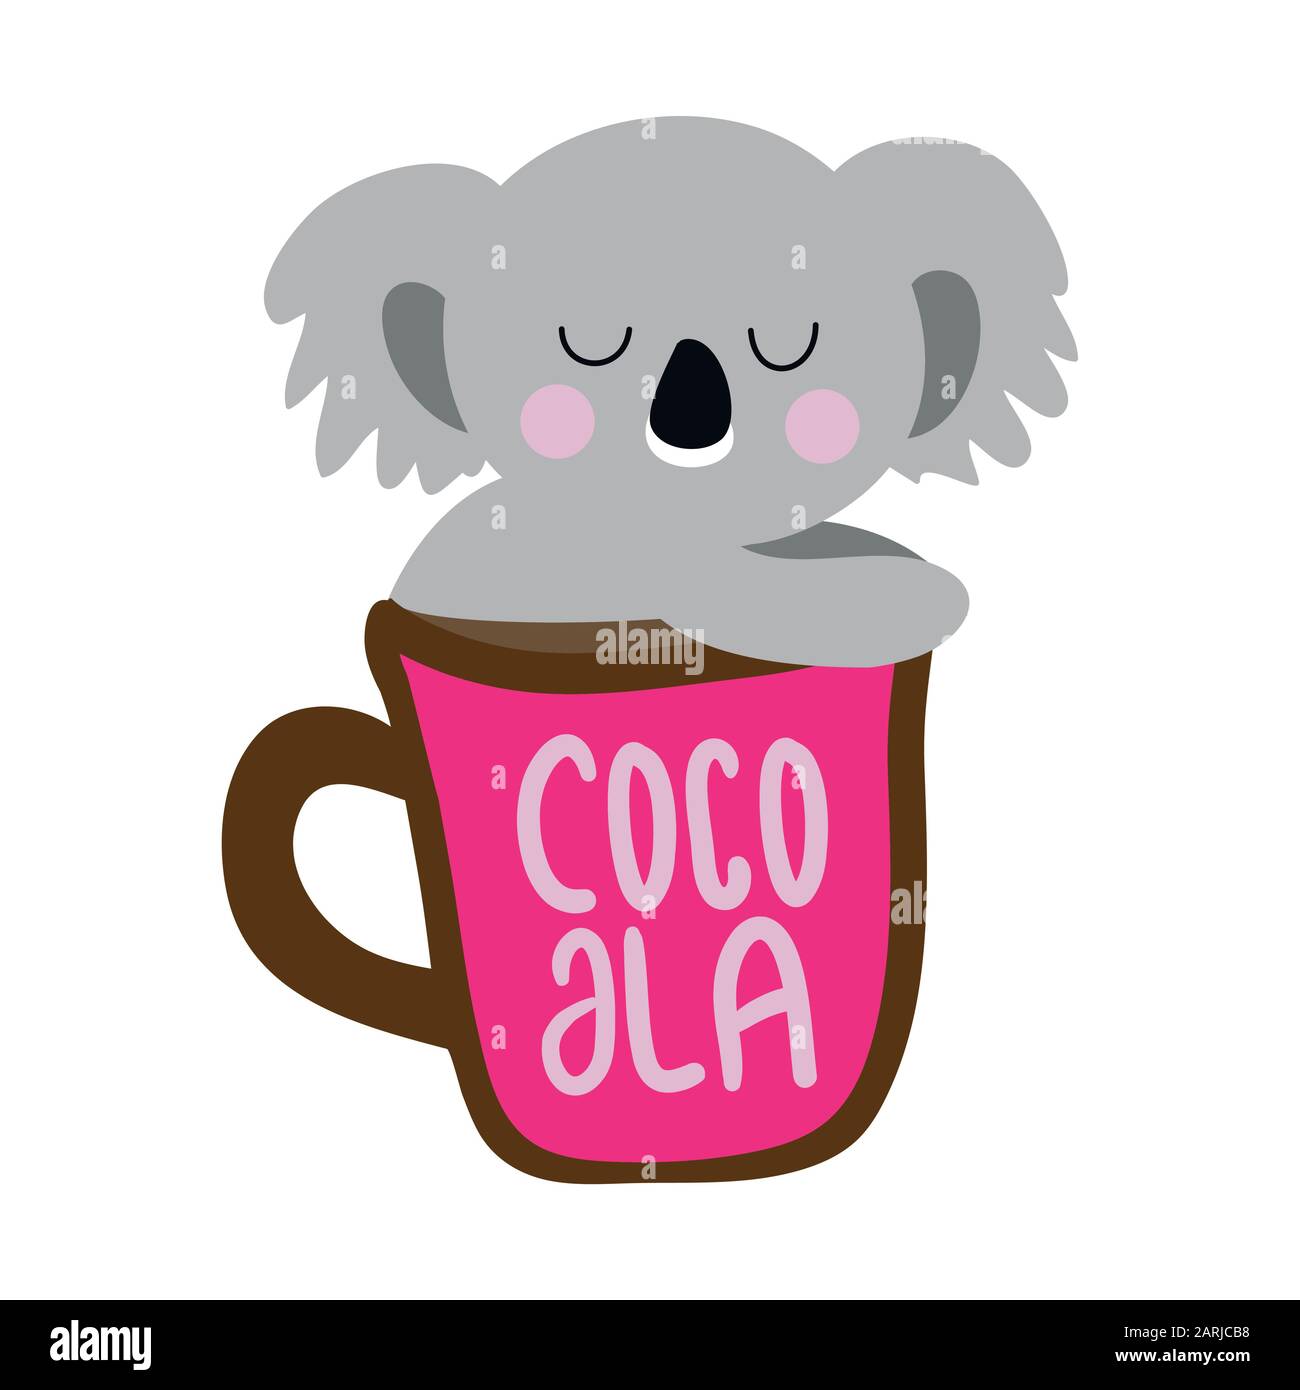 Макака коалу. Коала какао. Коала в какао макала. Коала с кофе. Макака коалу в какао макала.